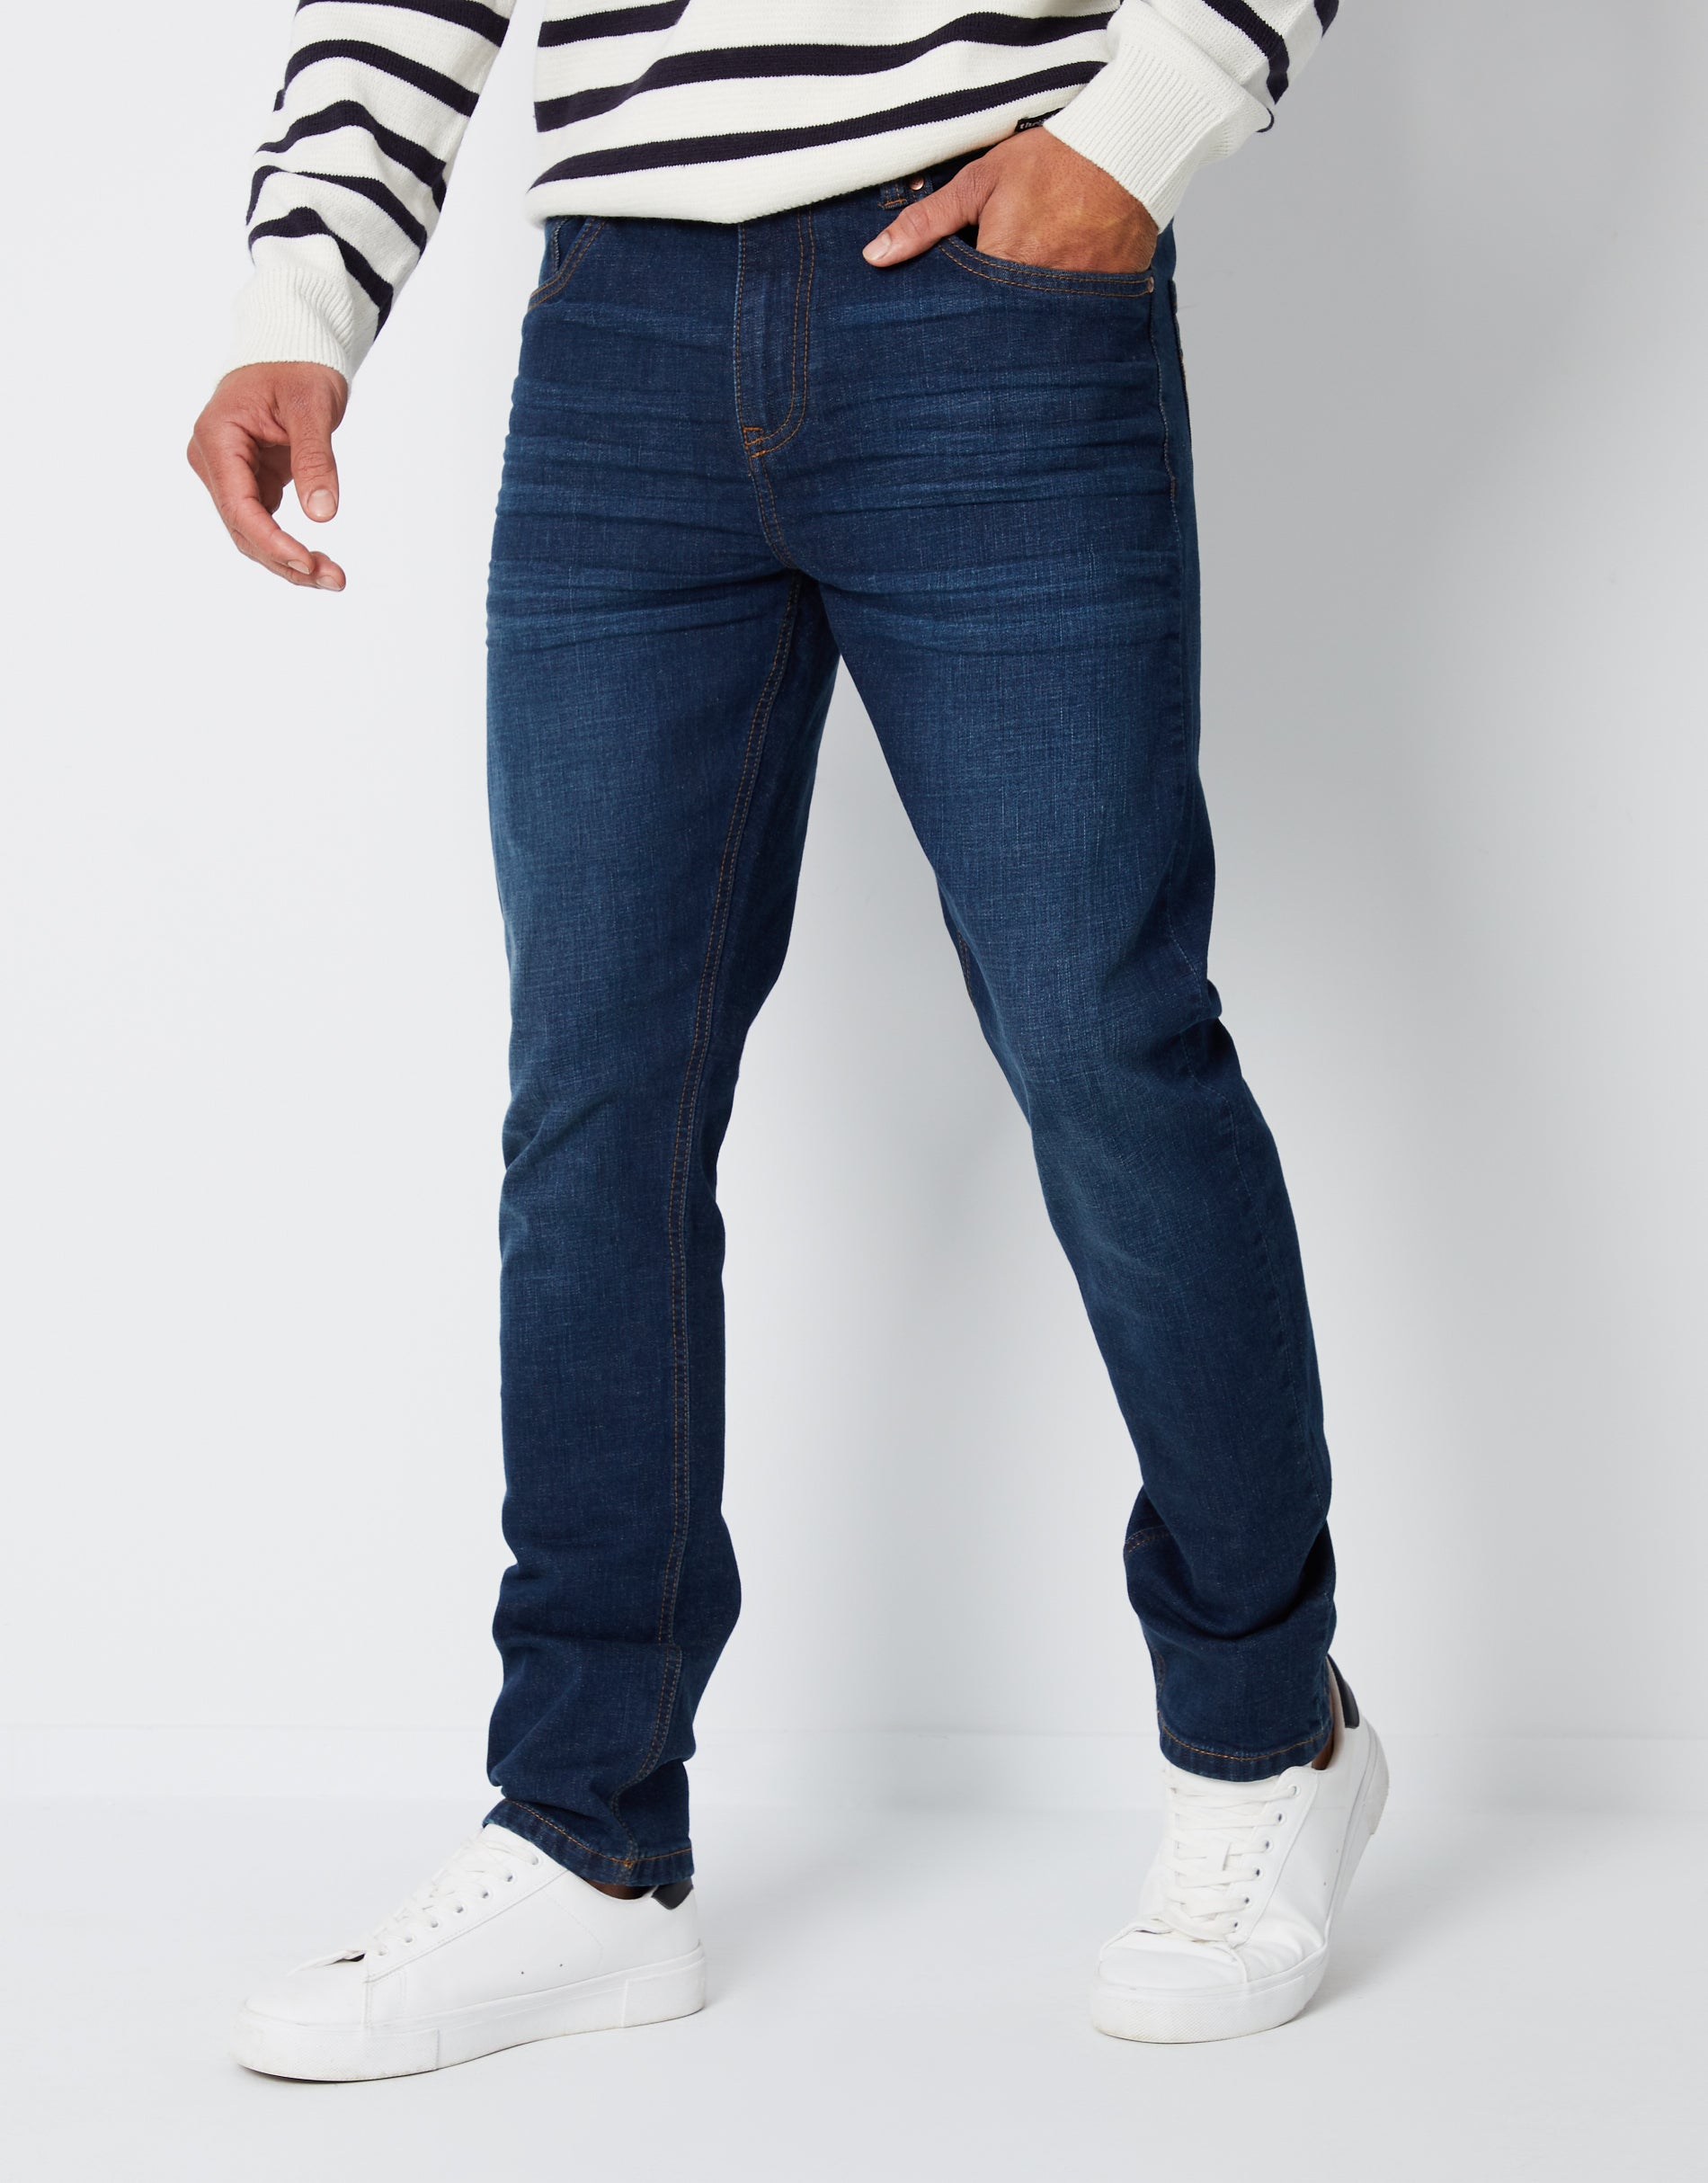 Bare Denim Faded Blue Jeans | Blue jeans, Jeans shop, Denim